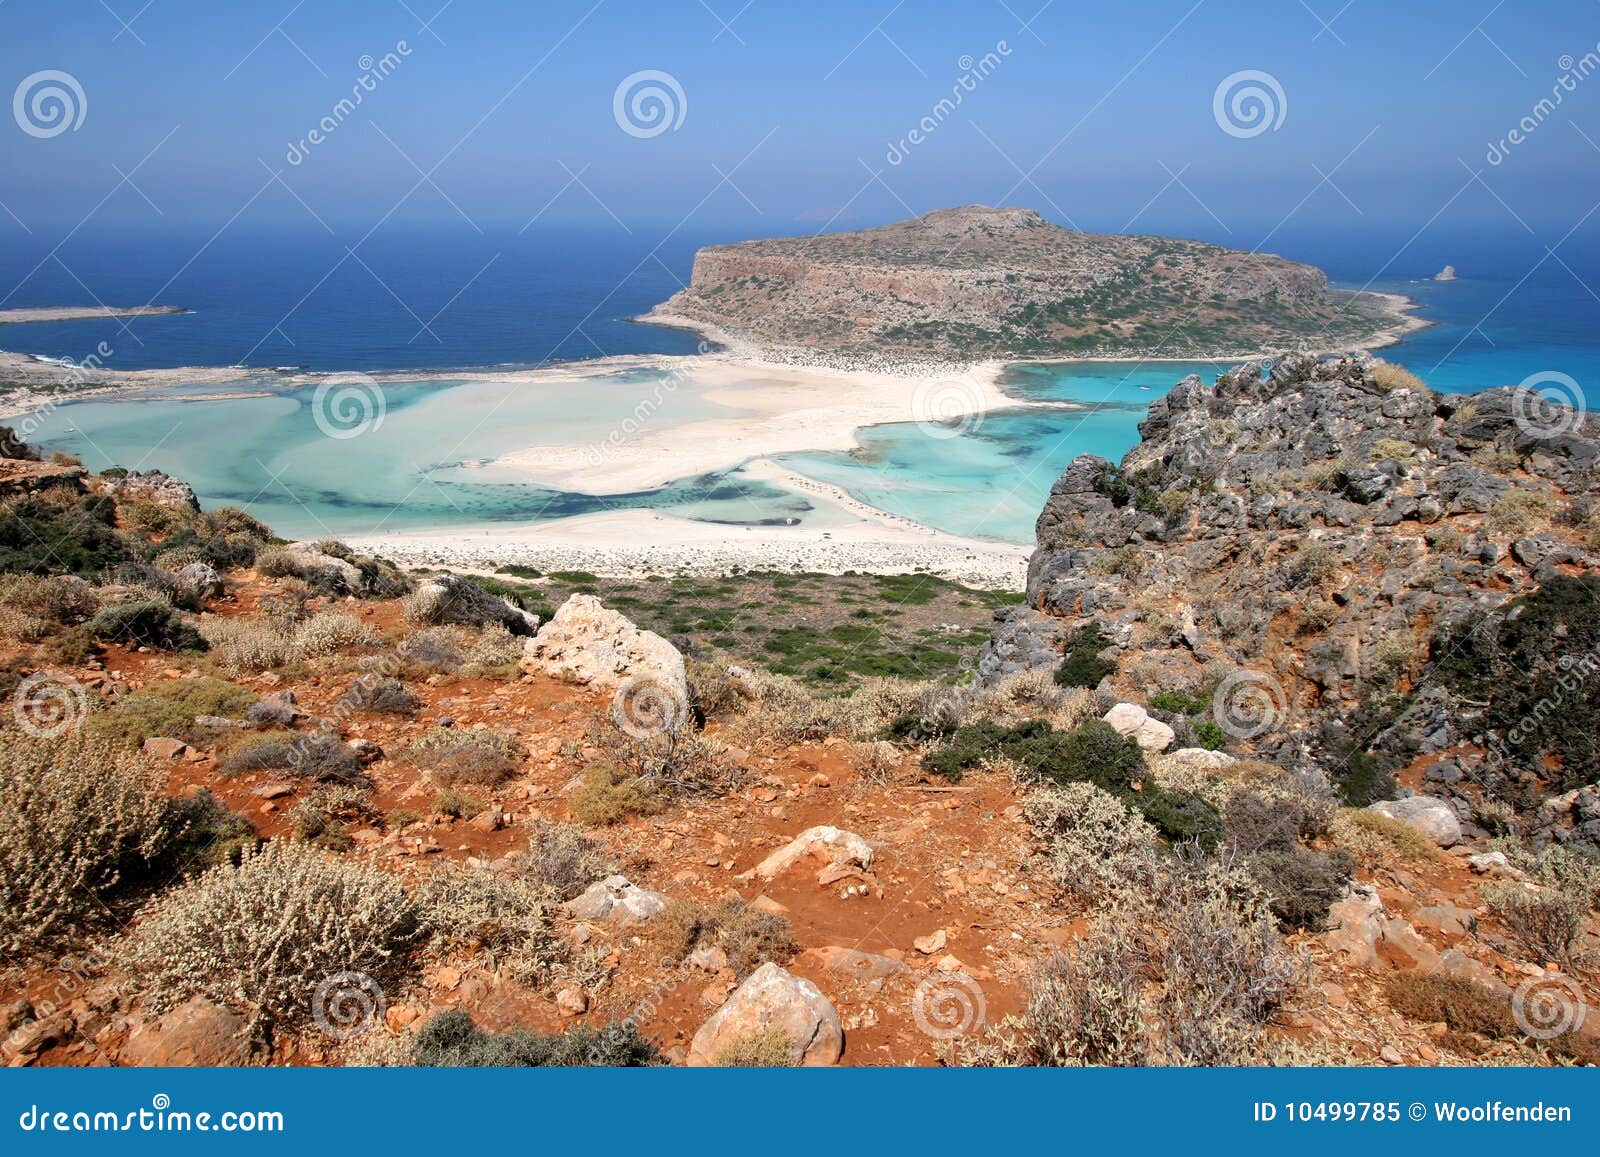 gramvousa island, crete